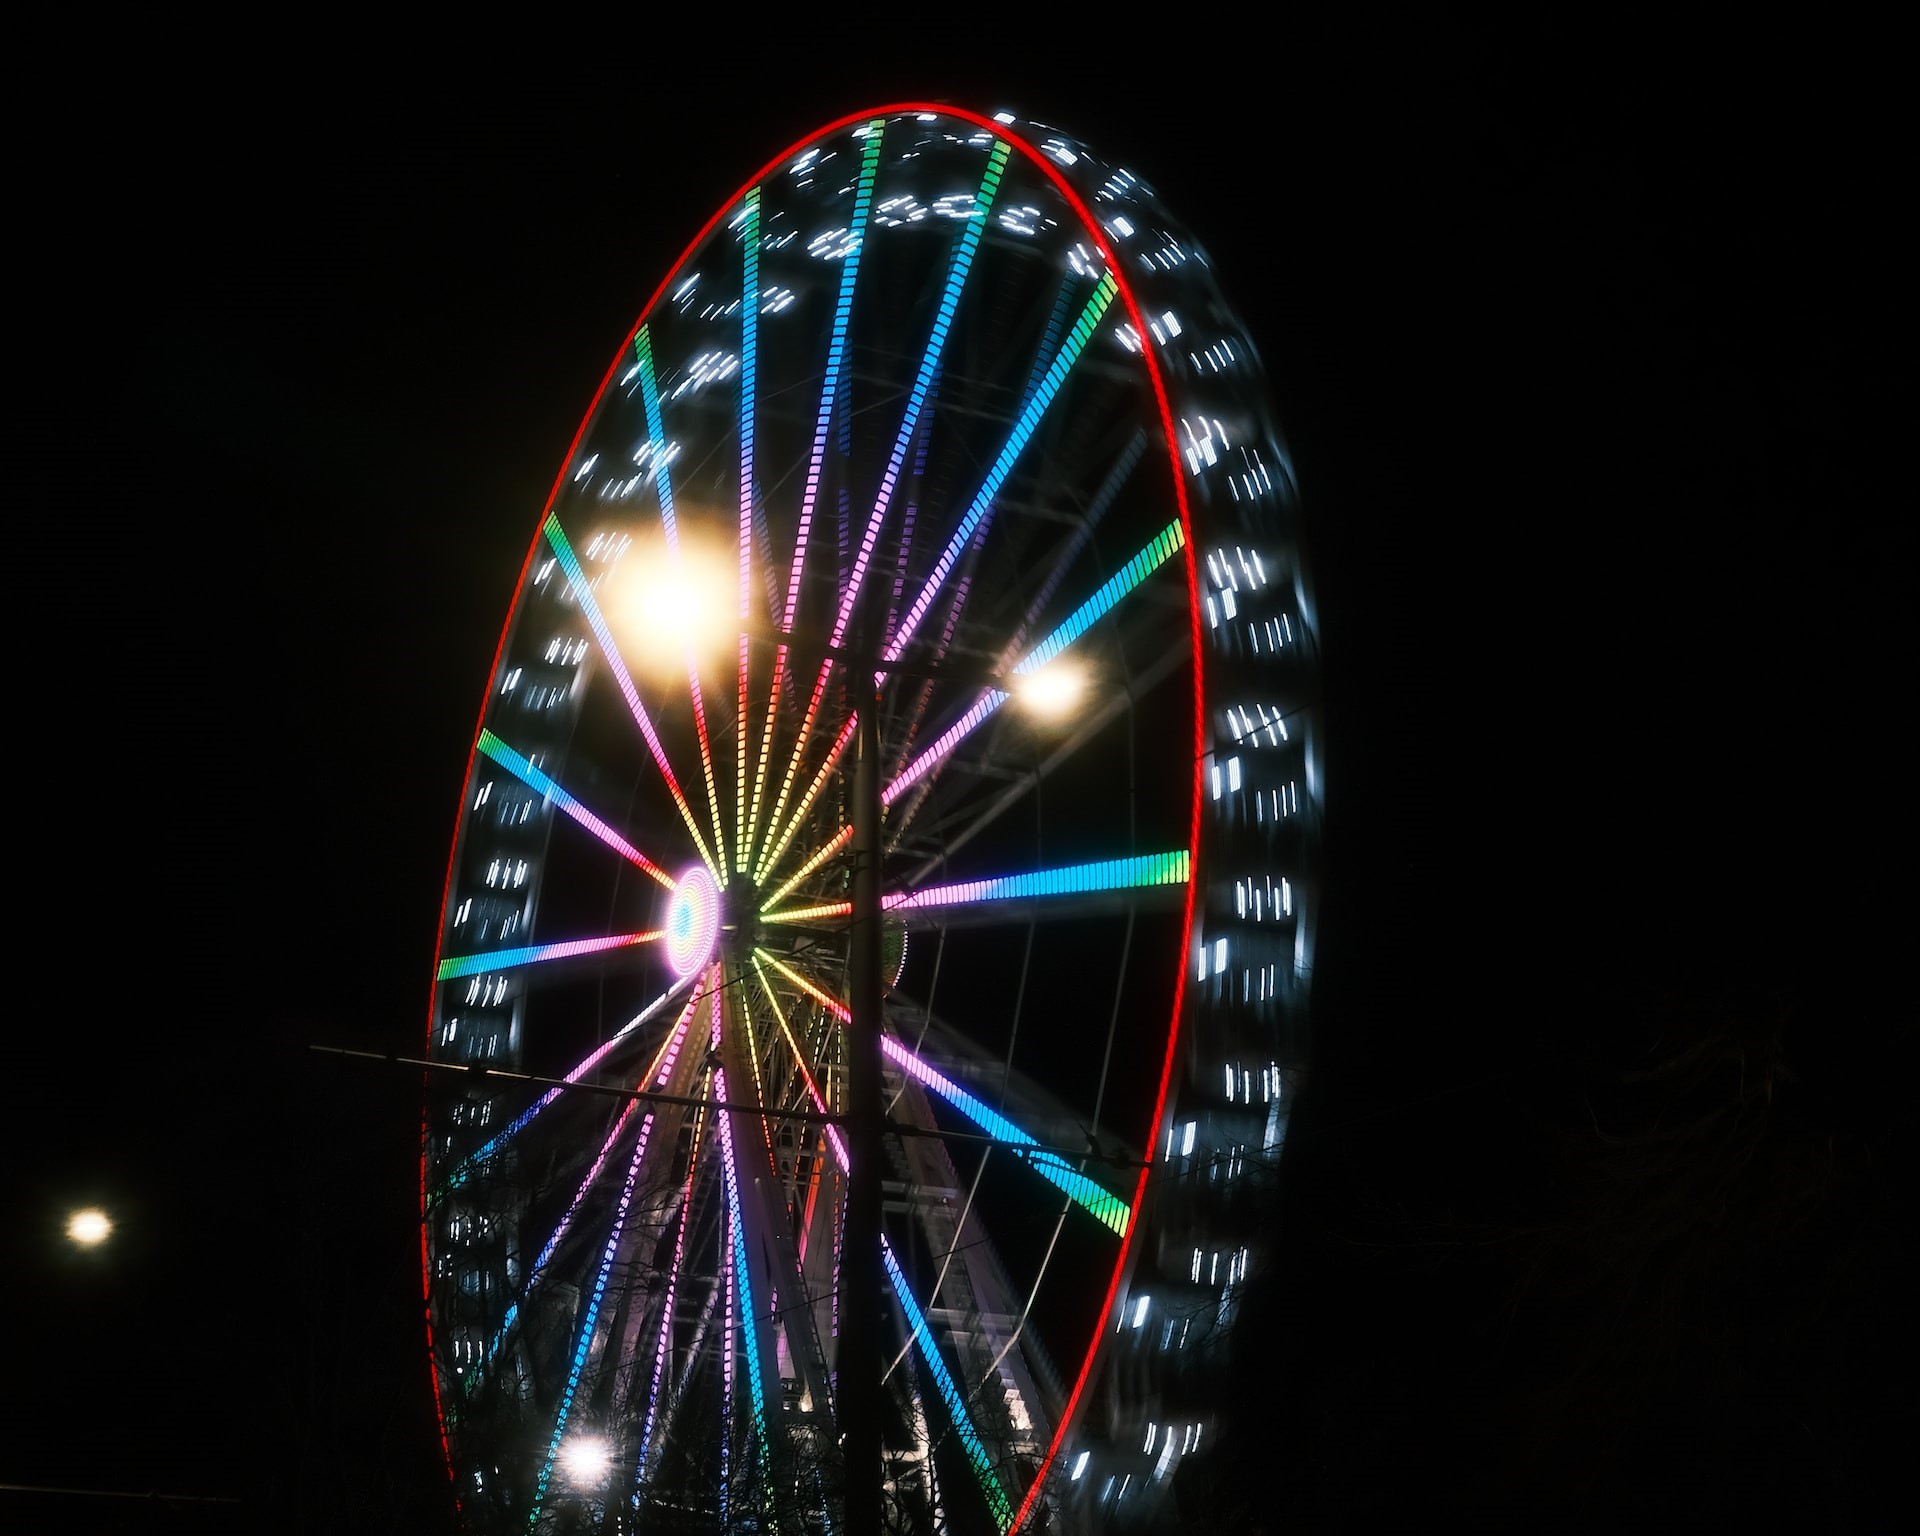 A night photo of a spinning Ferris wheel. Courtesy: Sasha Cures via Unsplash